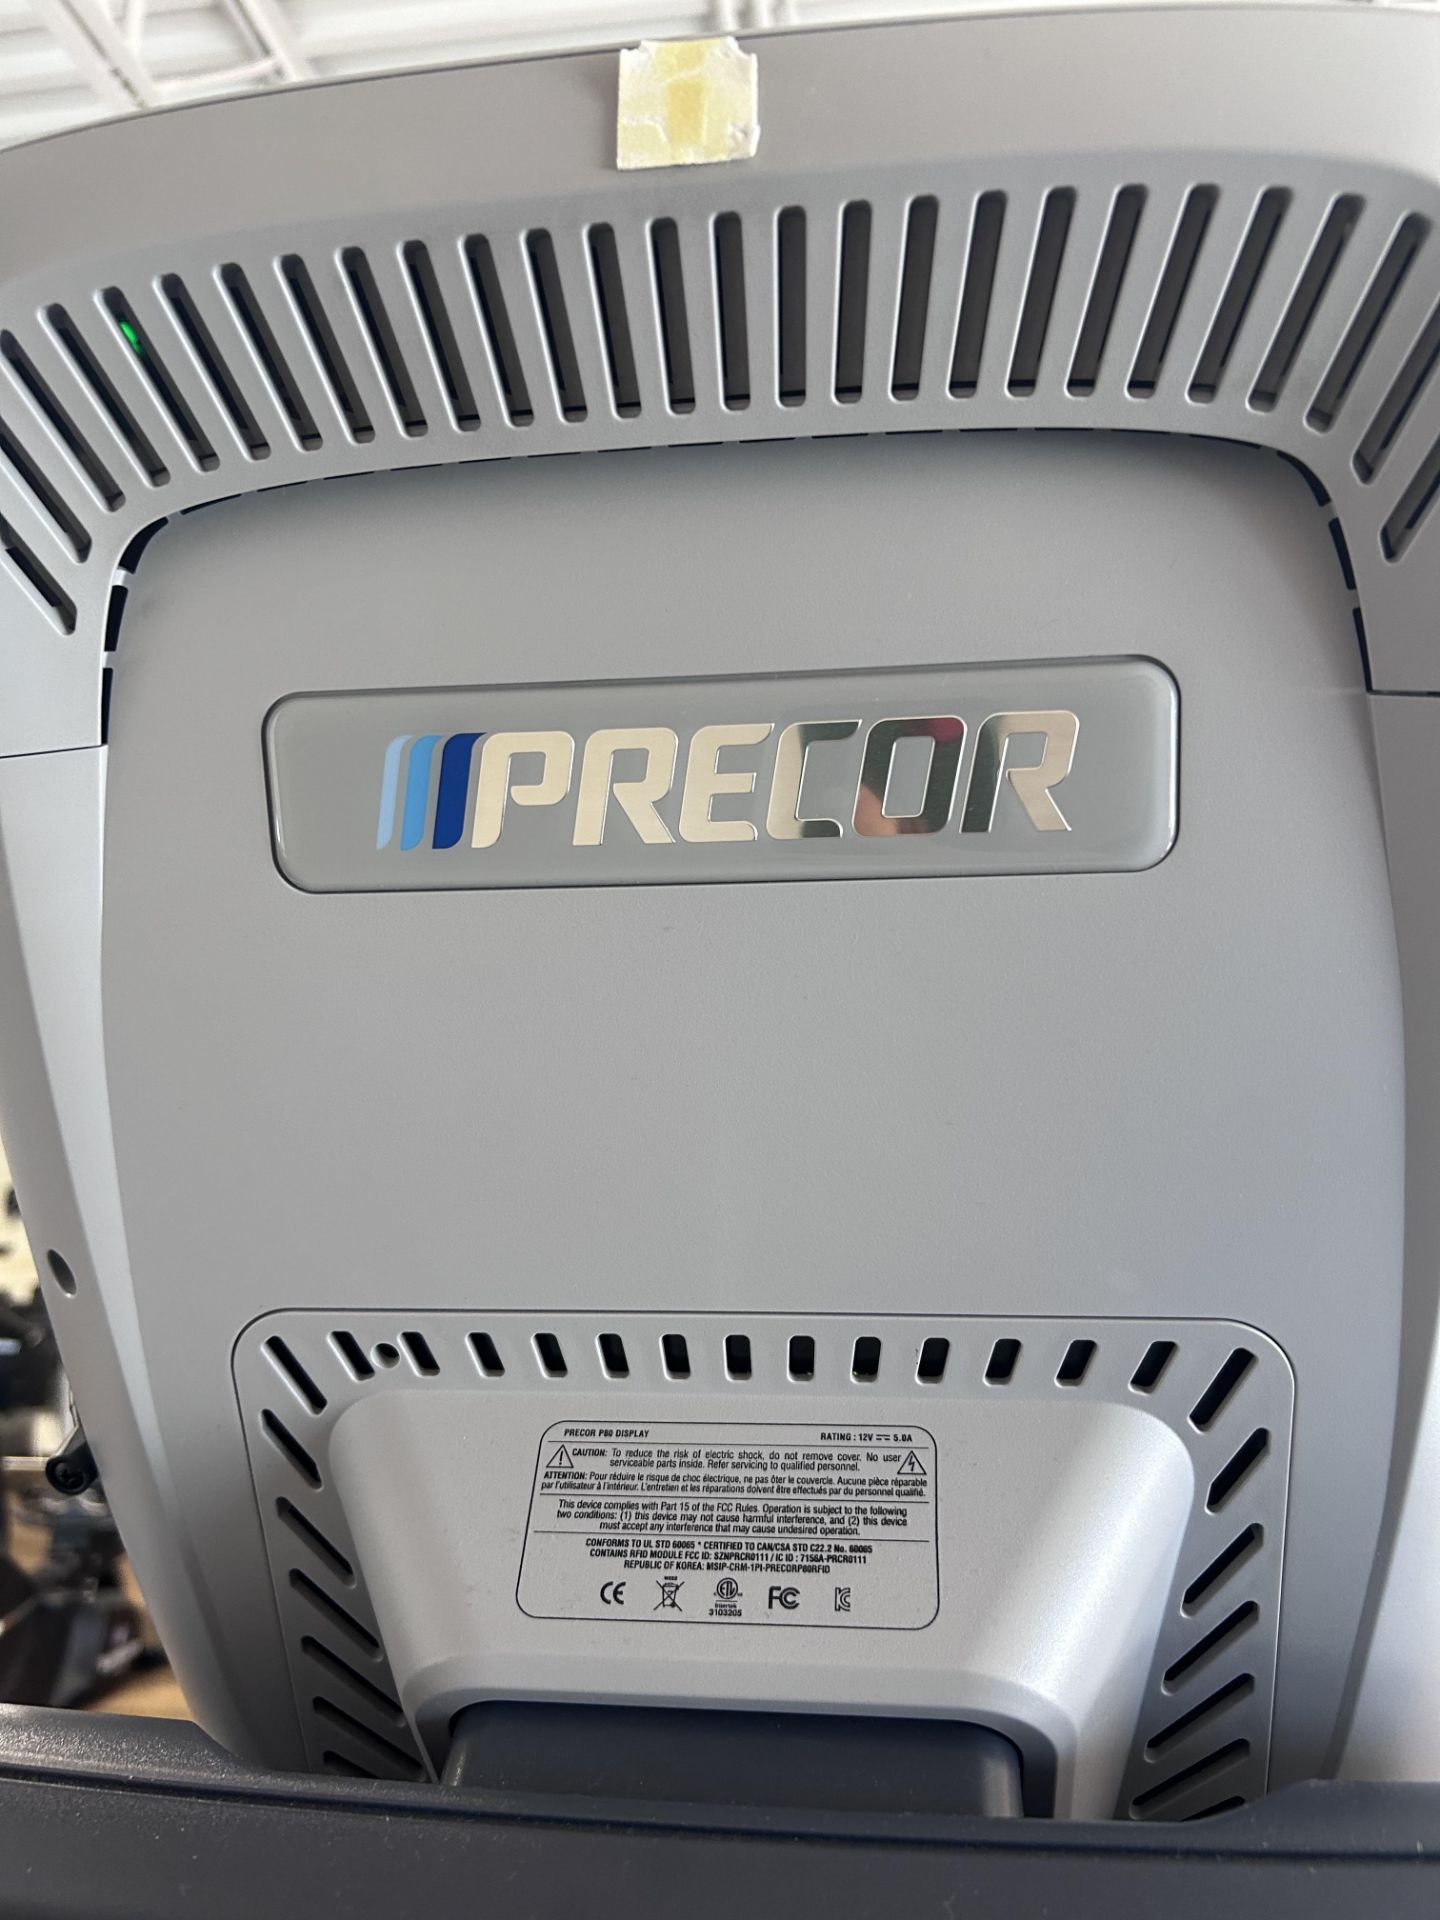 PRECOR mod. TRM 811 Treadmill with PRECOR P80 Display Console, ser. AGNBG07140012 - Image 3 of 4